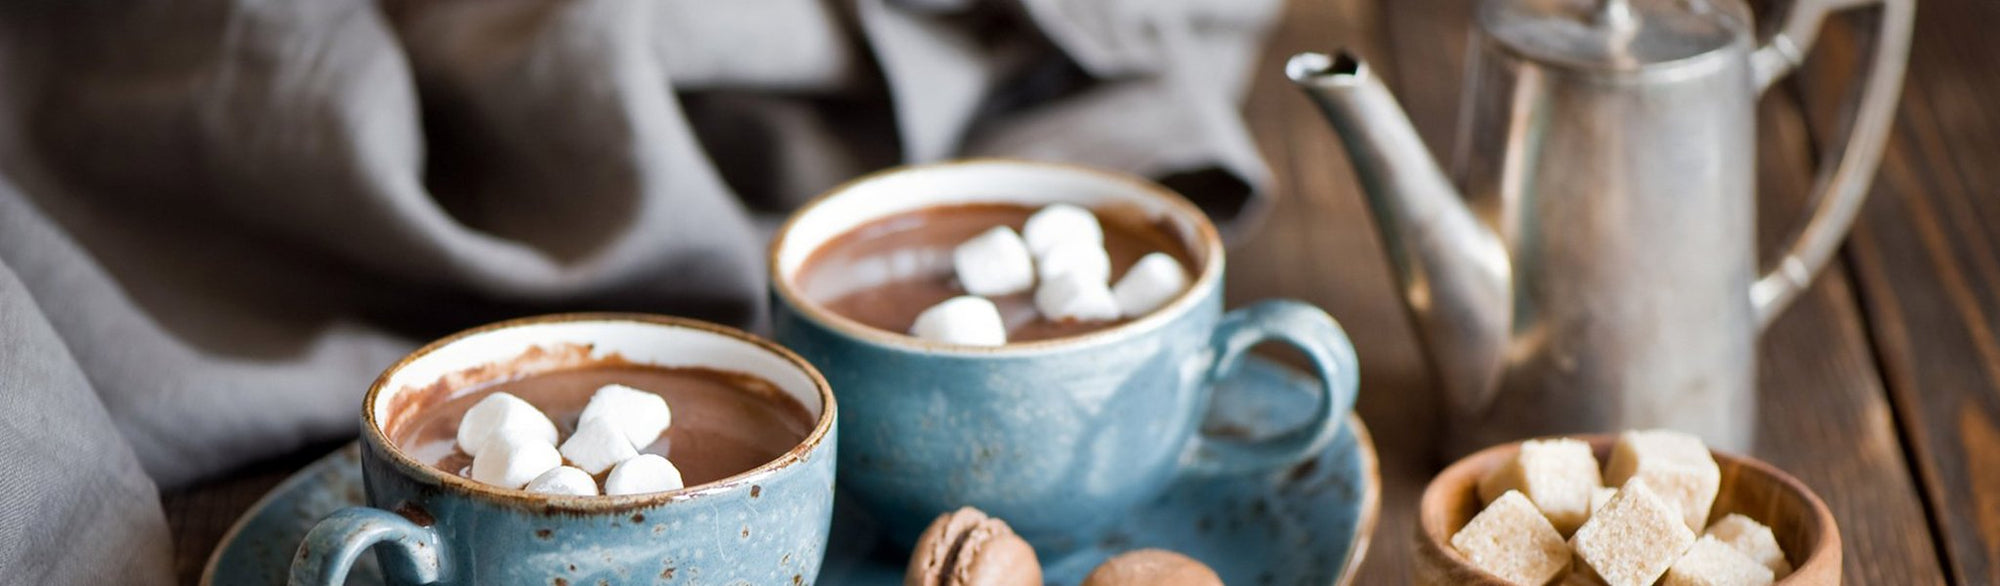 chocolat chaud hot chocolate